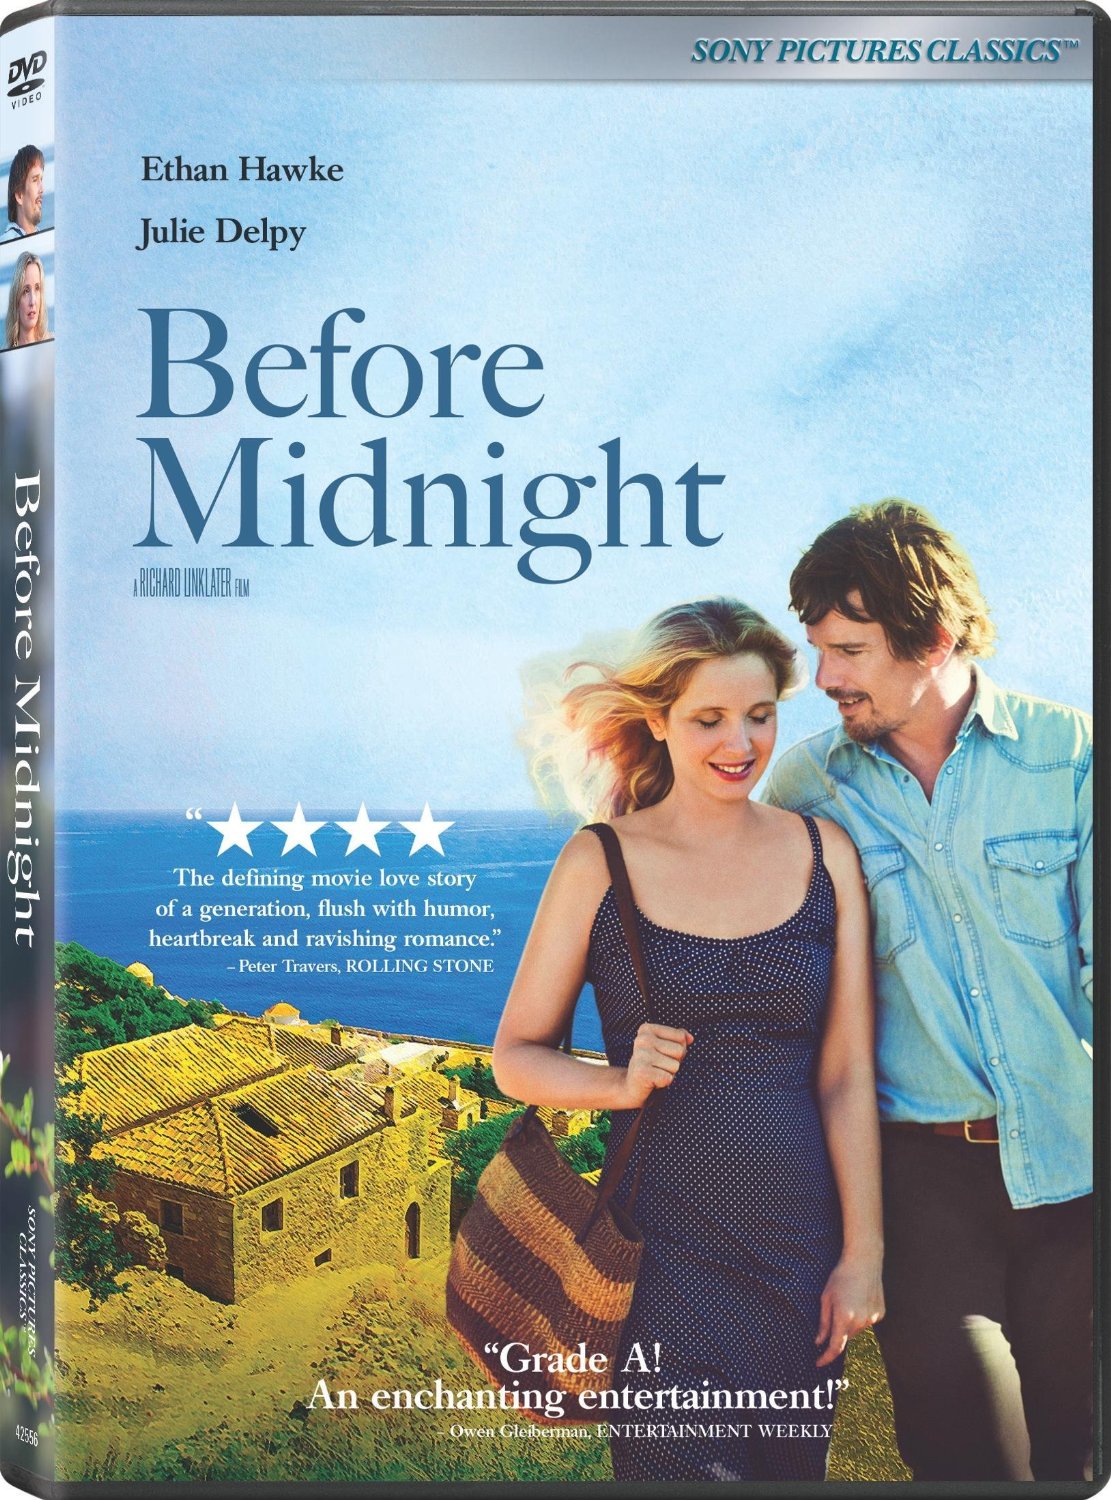 Before Midnight (2013) 